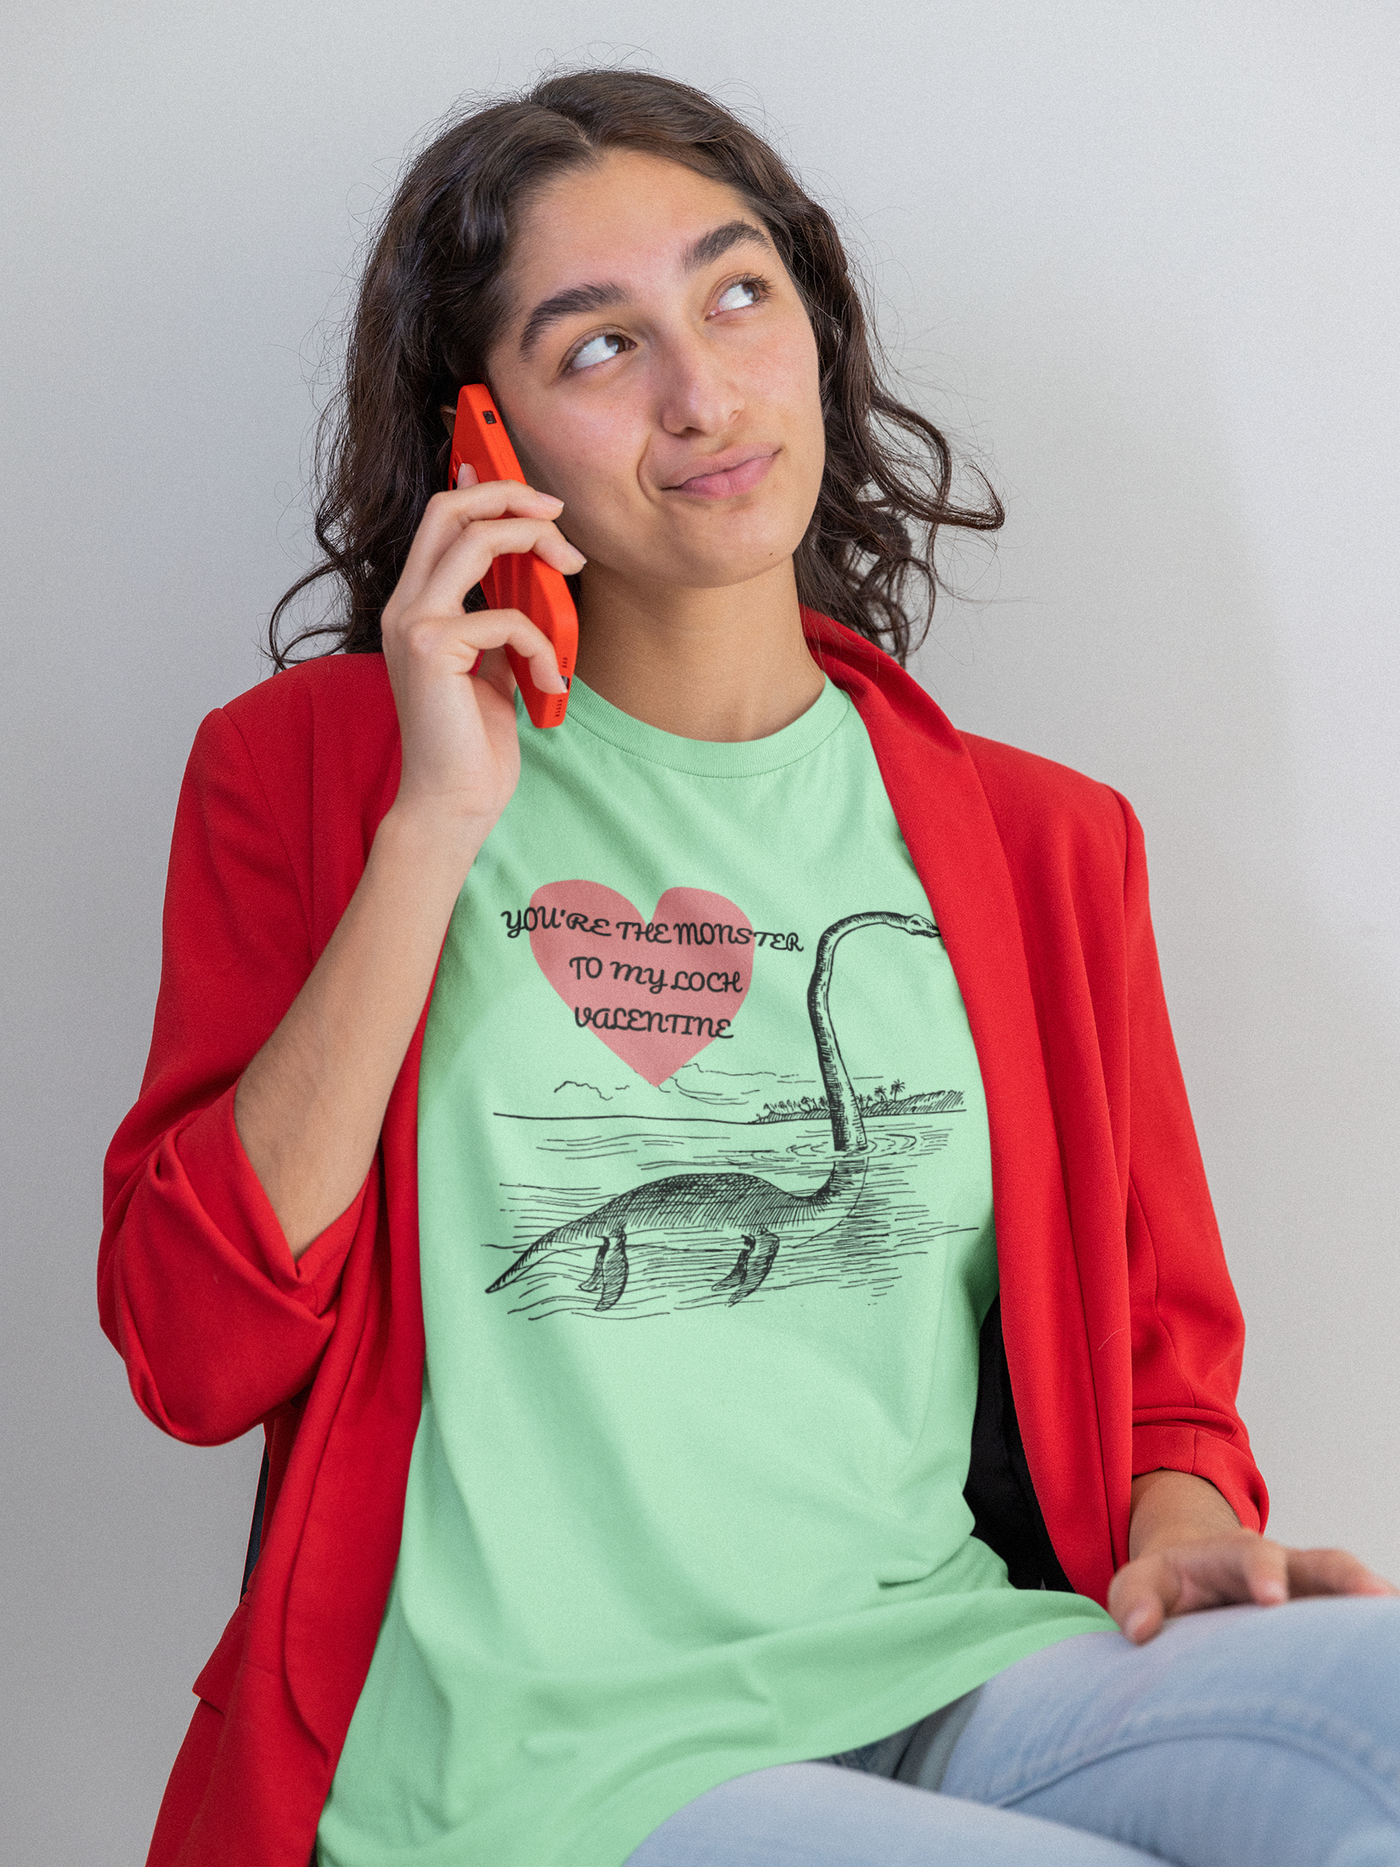 Loch Ness Monster - Valentine's Day - Graphic t-shirt